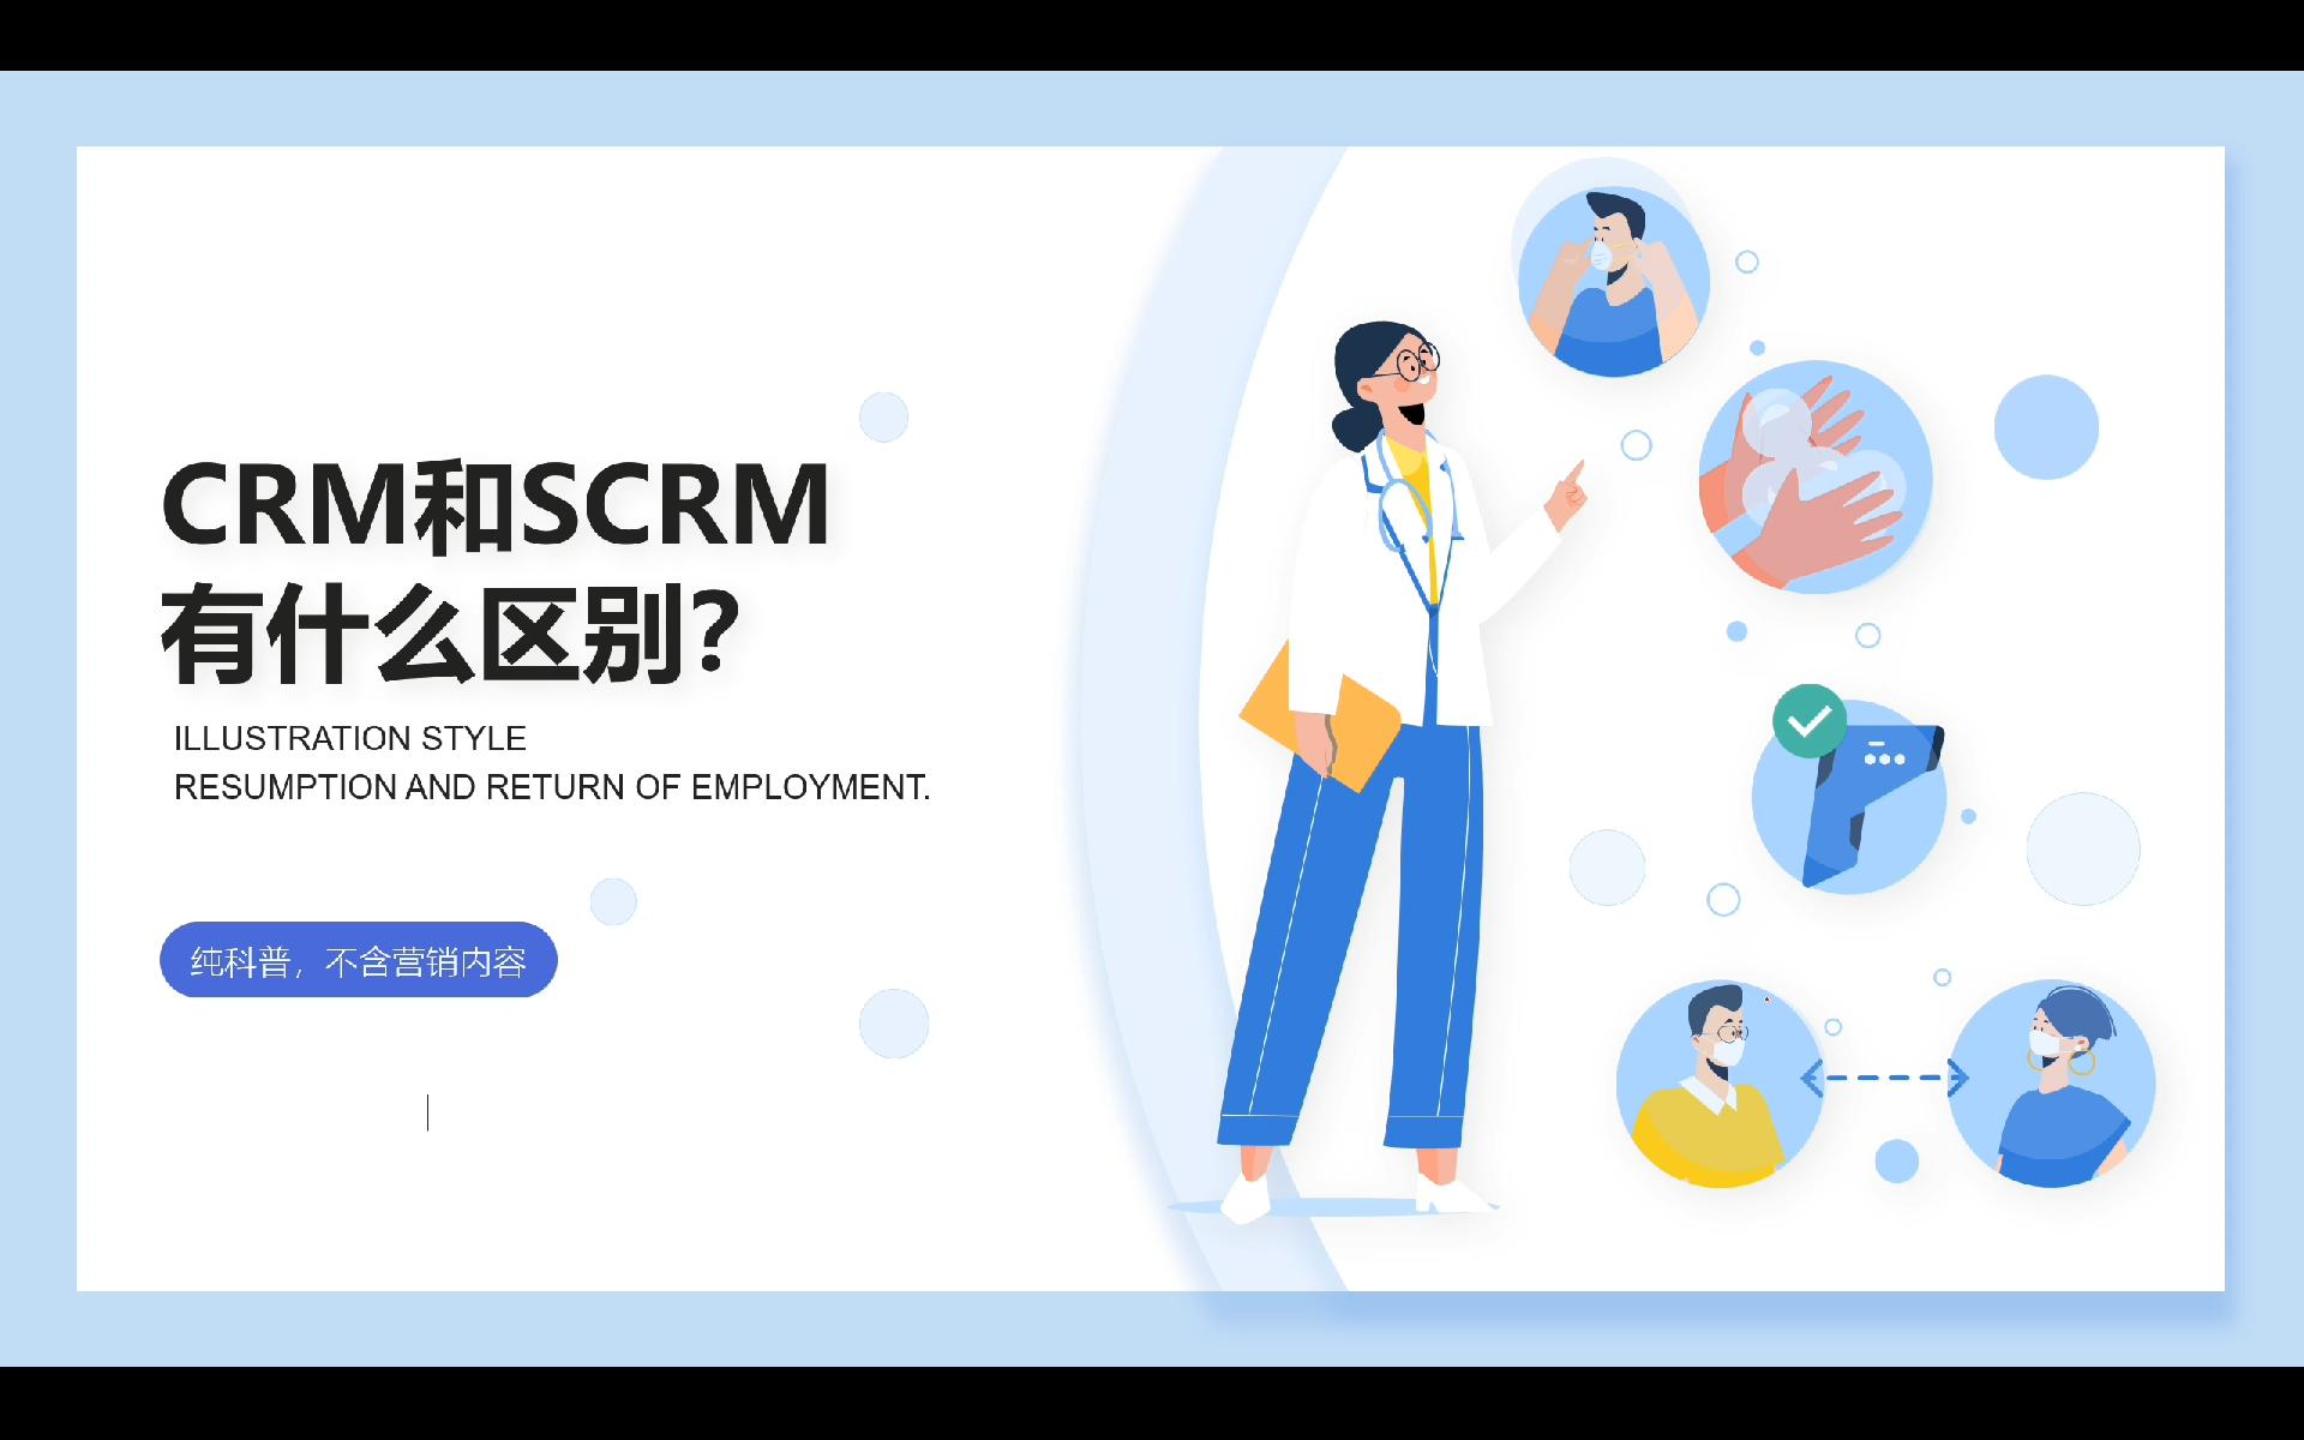 CRM和SCRM有什么区别？